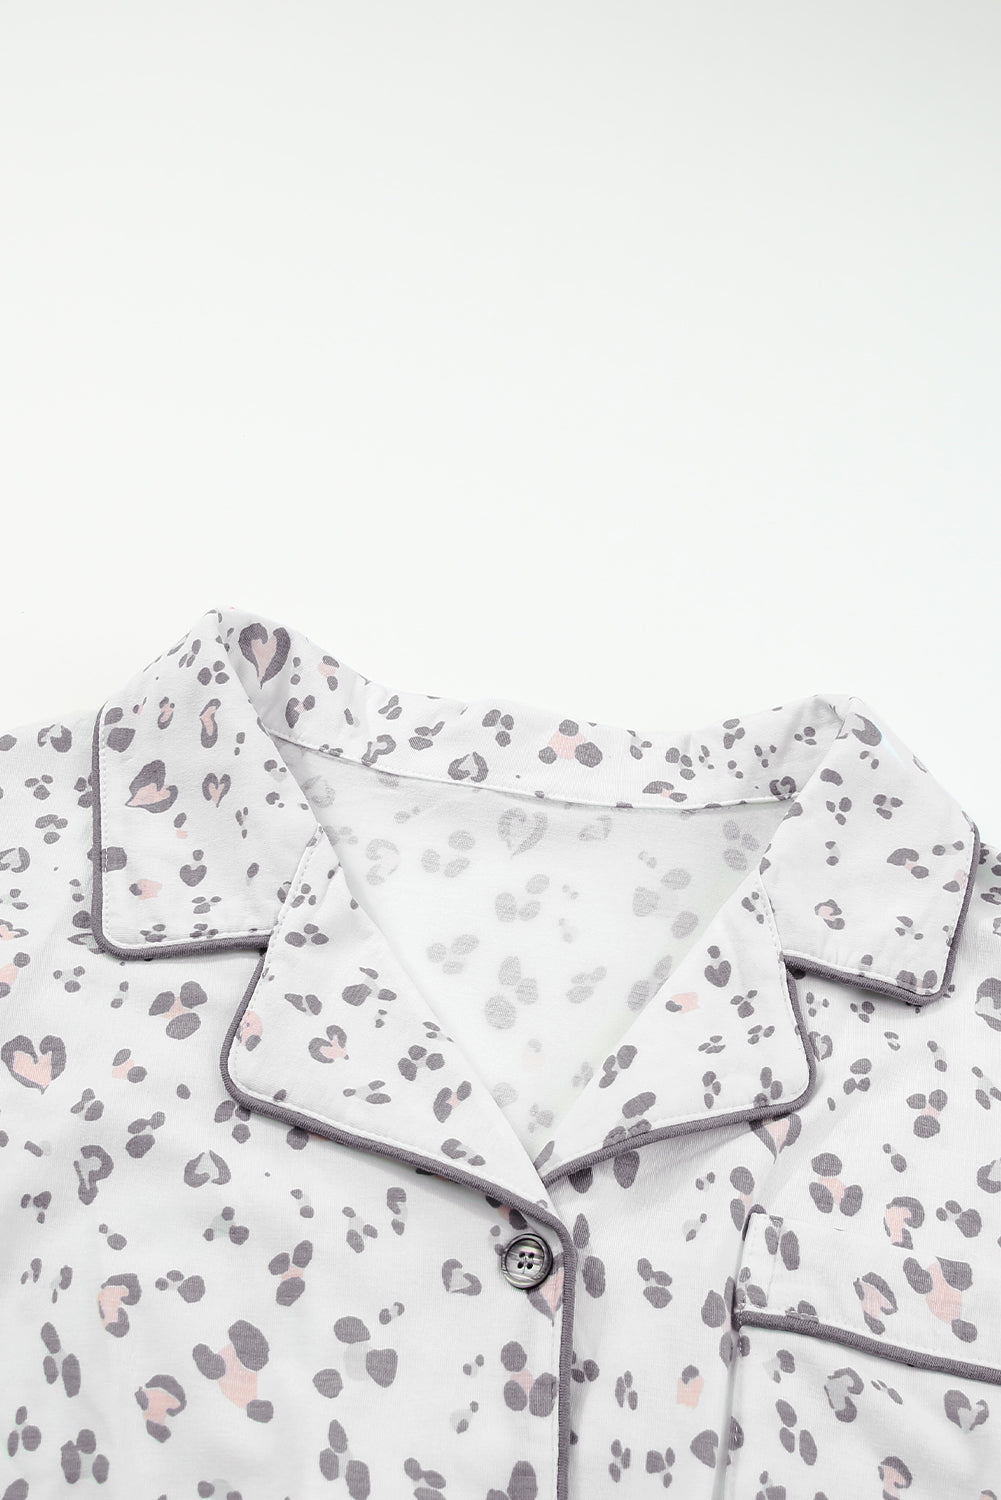 White Leopard Print Long Sleeve and Pants Pajamas Set